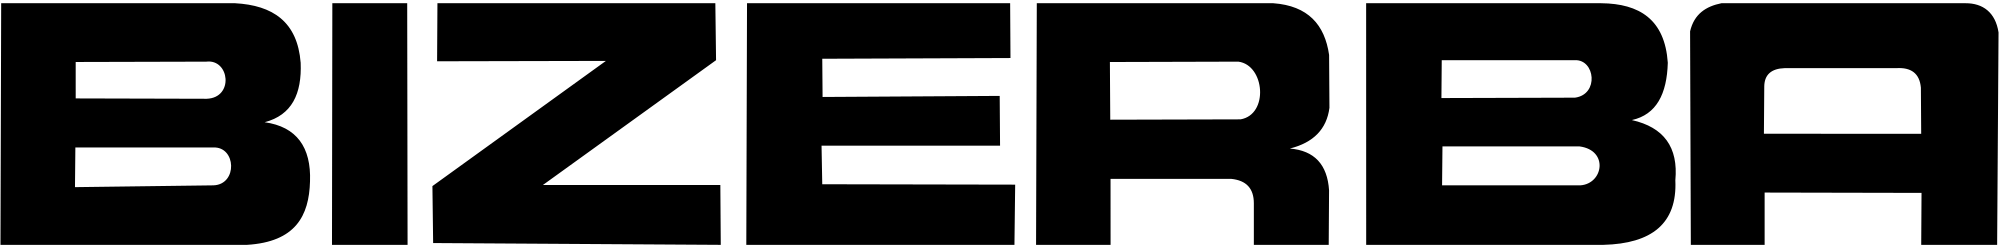 Logo Bizerba